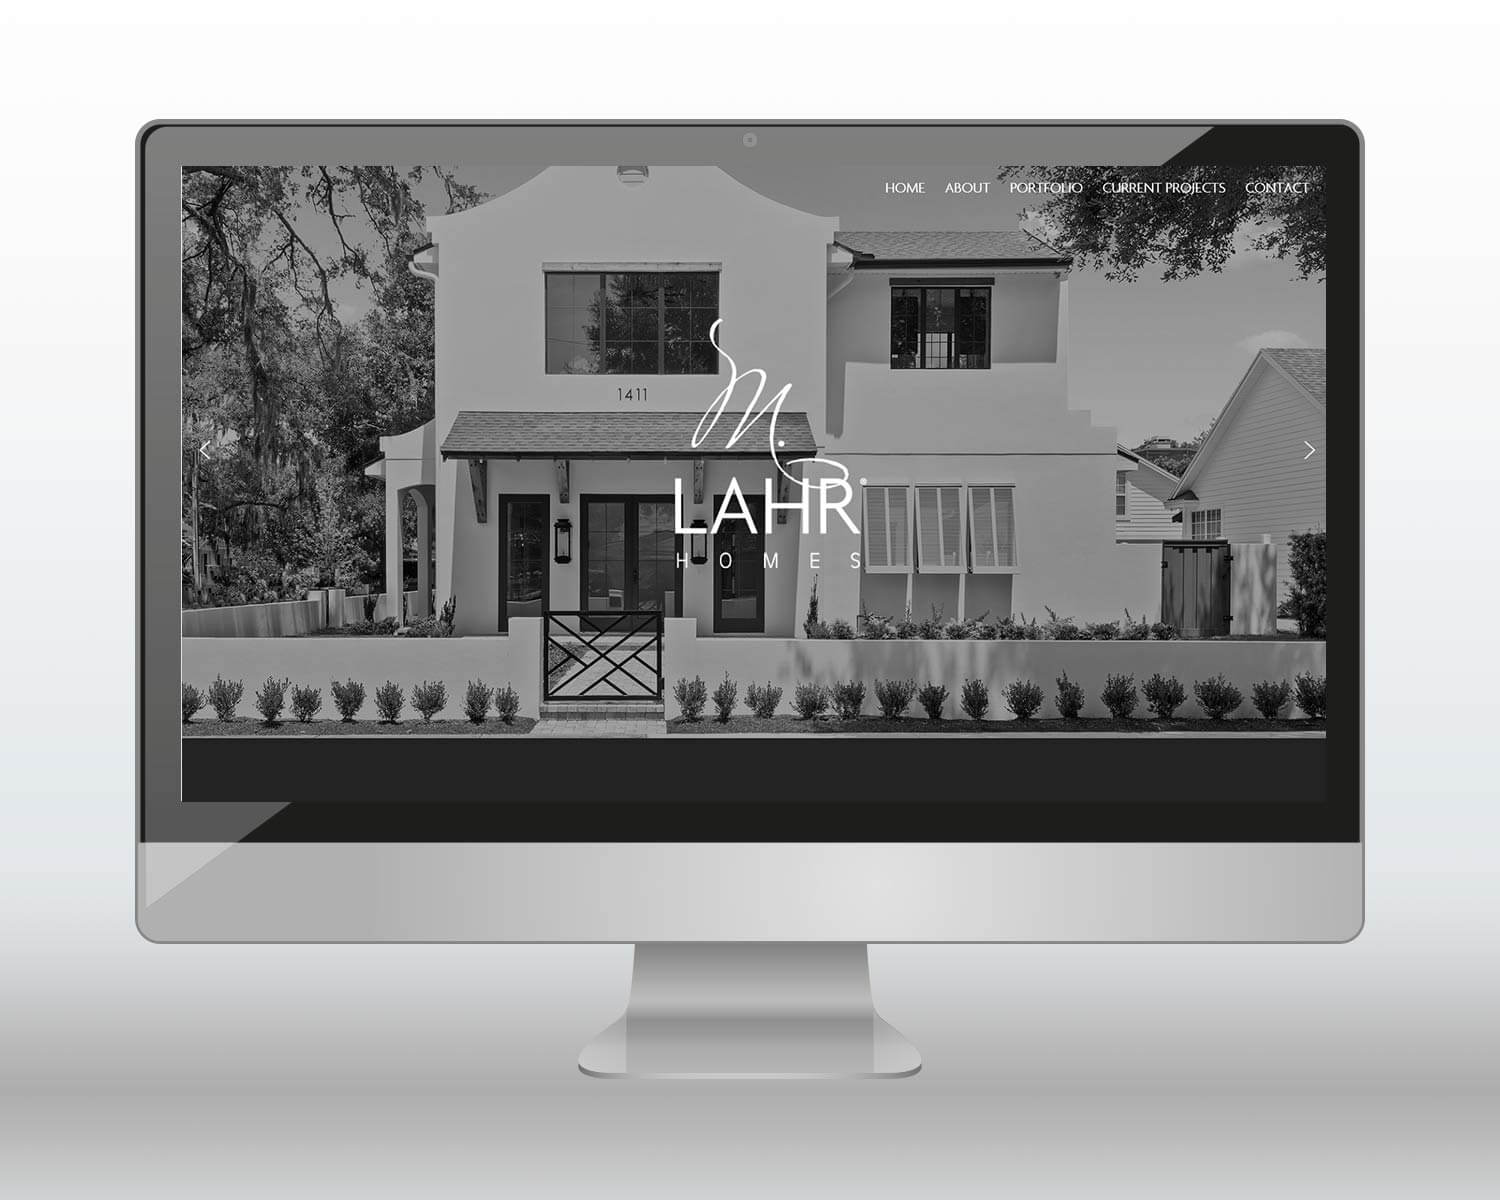 M. Lahr Homes Website Redesign